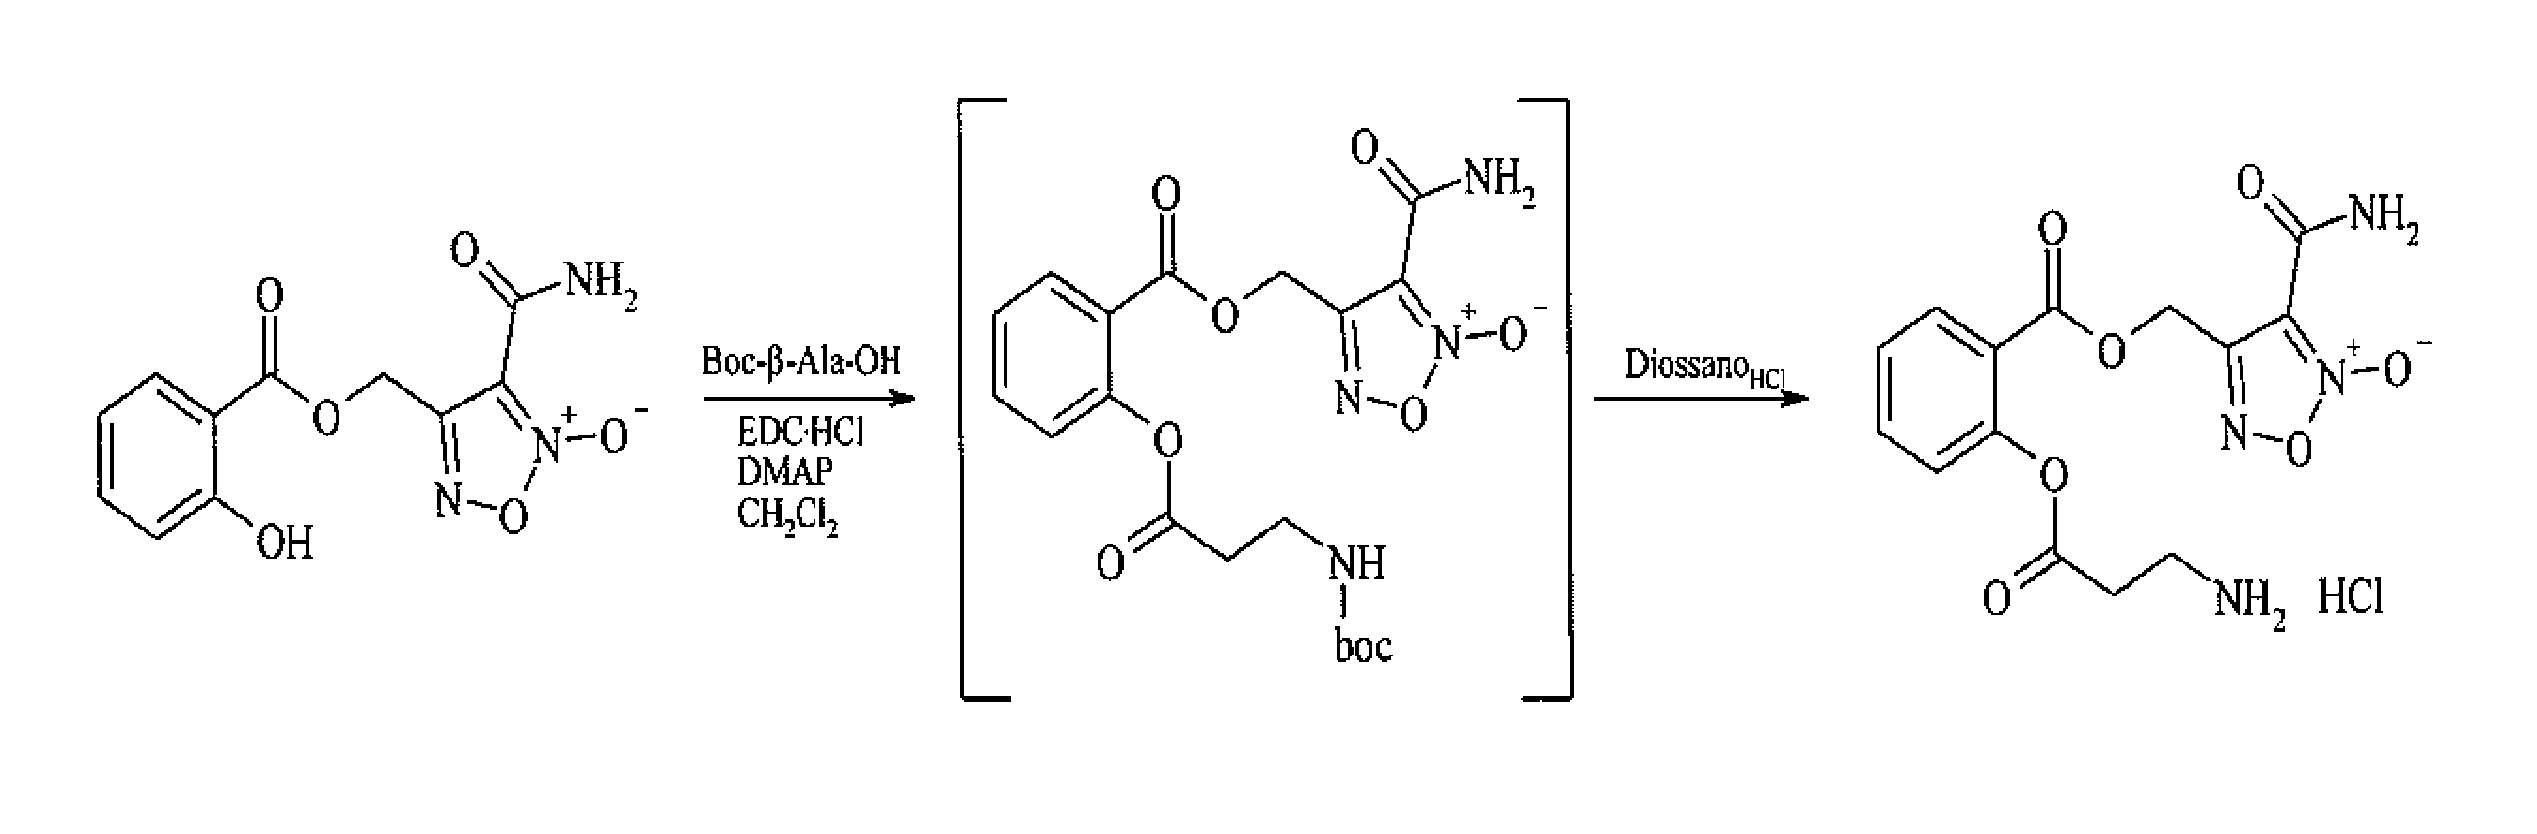 Novel water soluble furoxan derivatives having antitumor activity